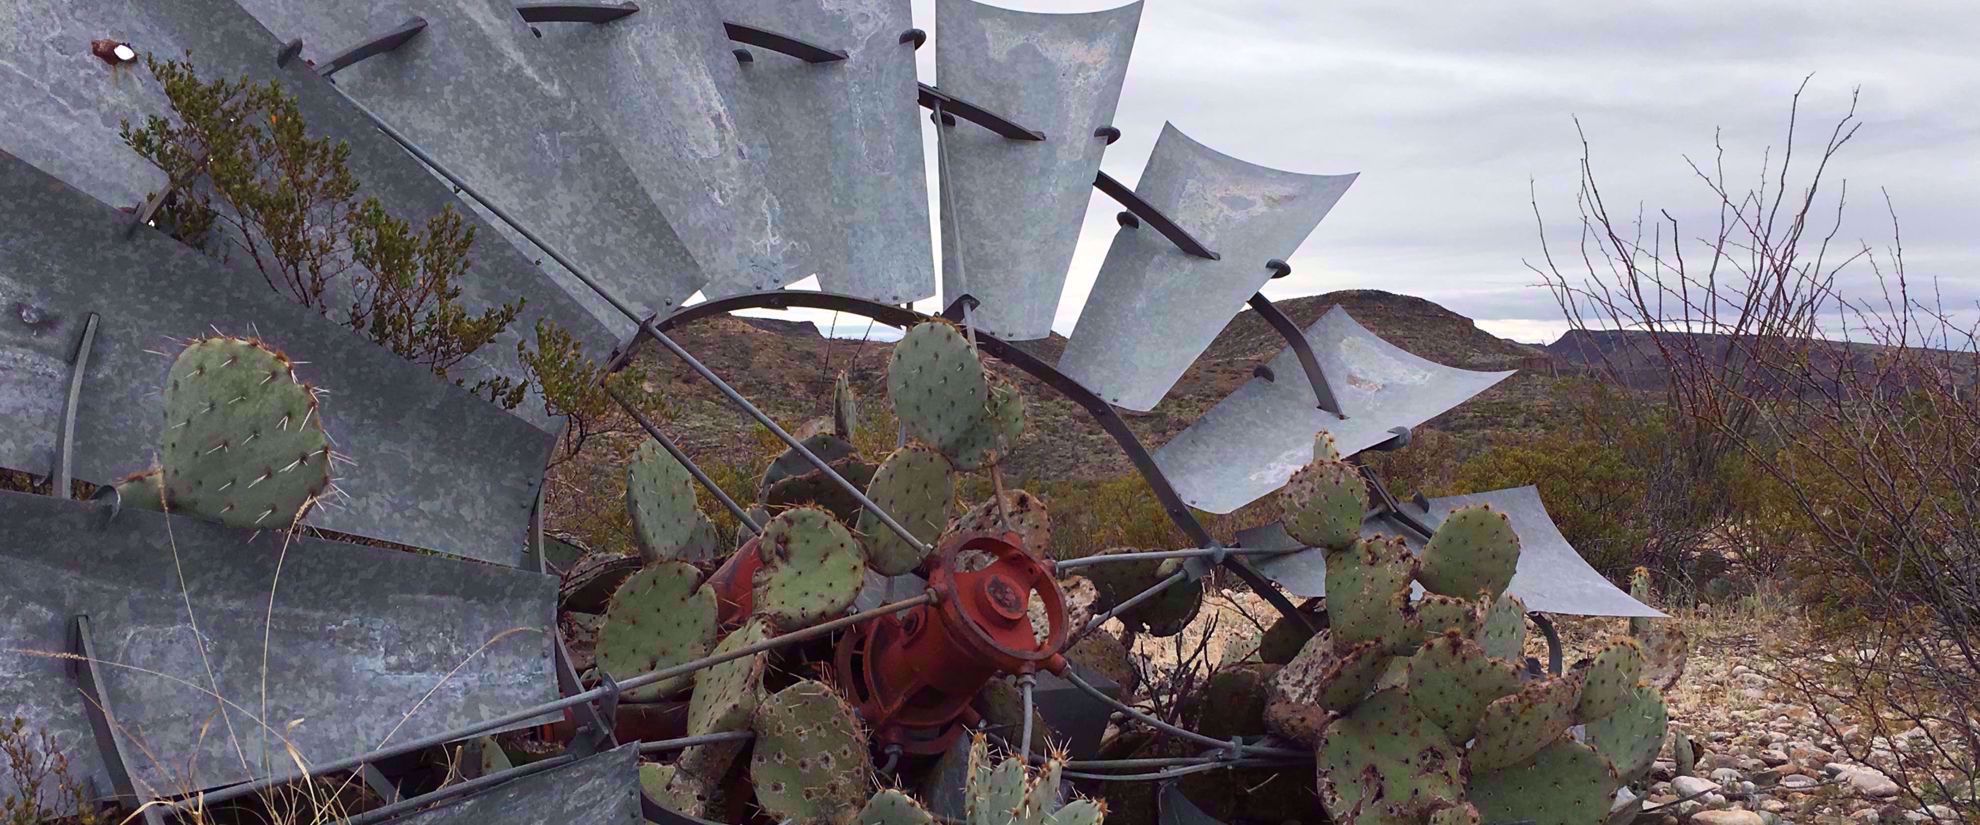 Fallen windmill growing cactus